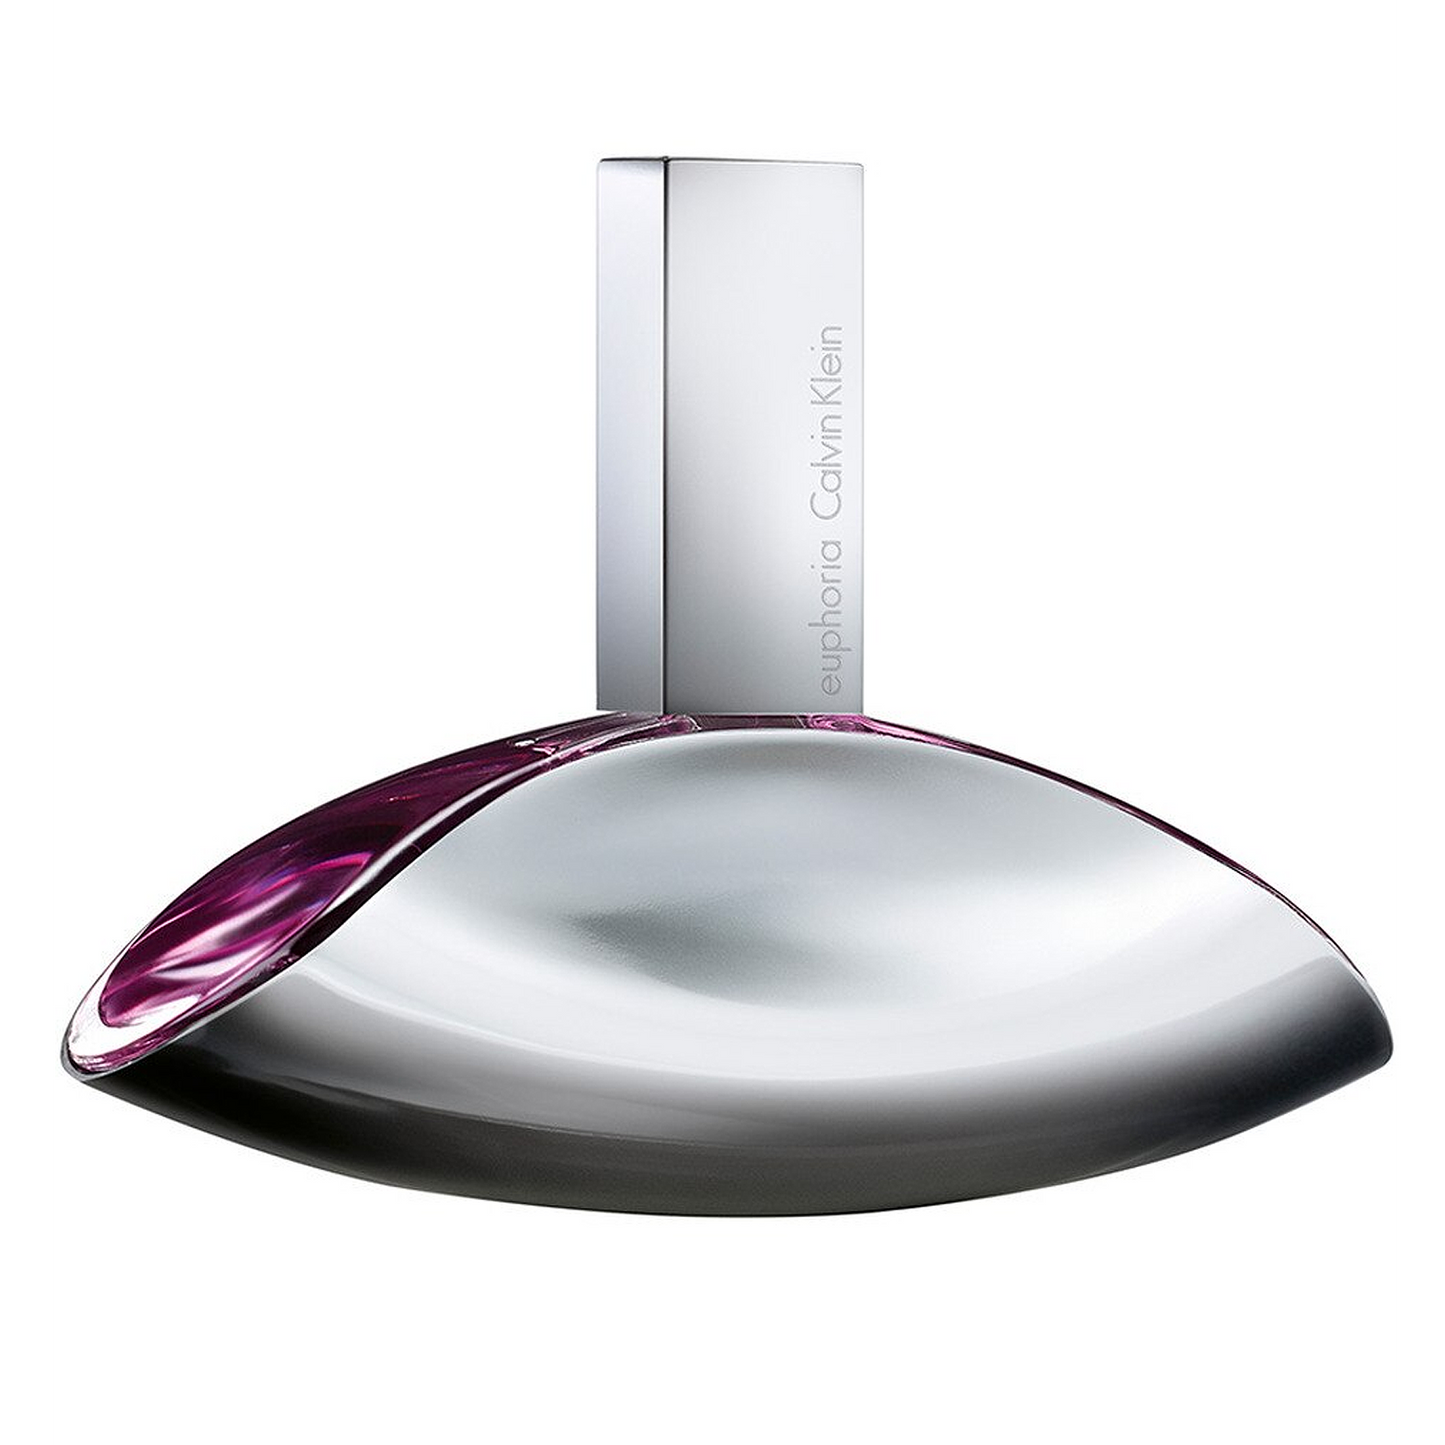 Perfume Para Mujer Euphoria 100ml Set 2pz Calvin Klein®